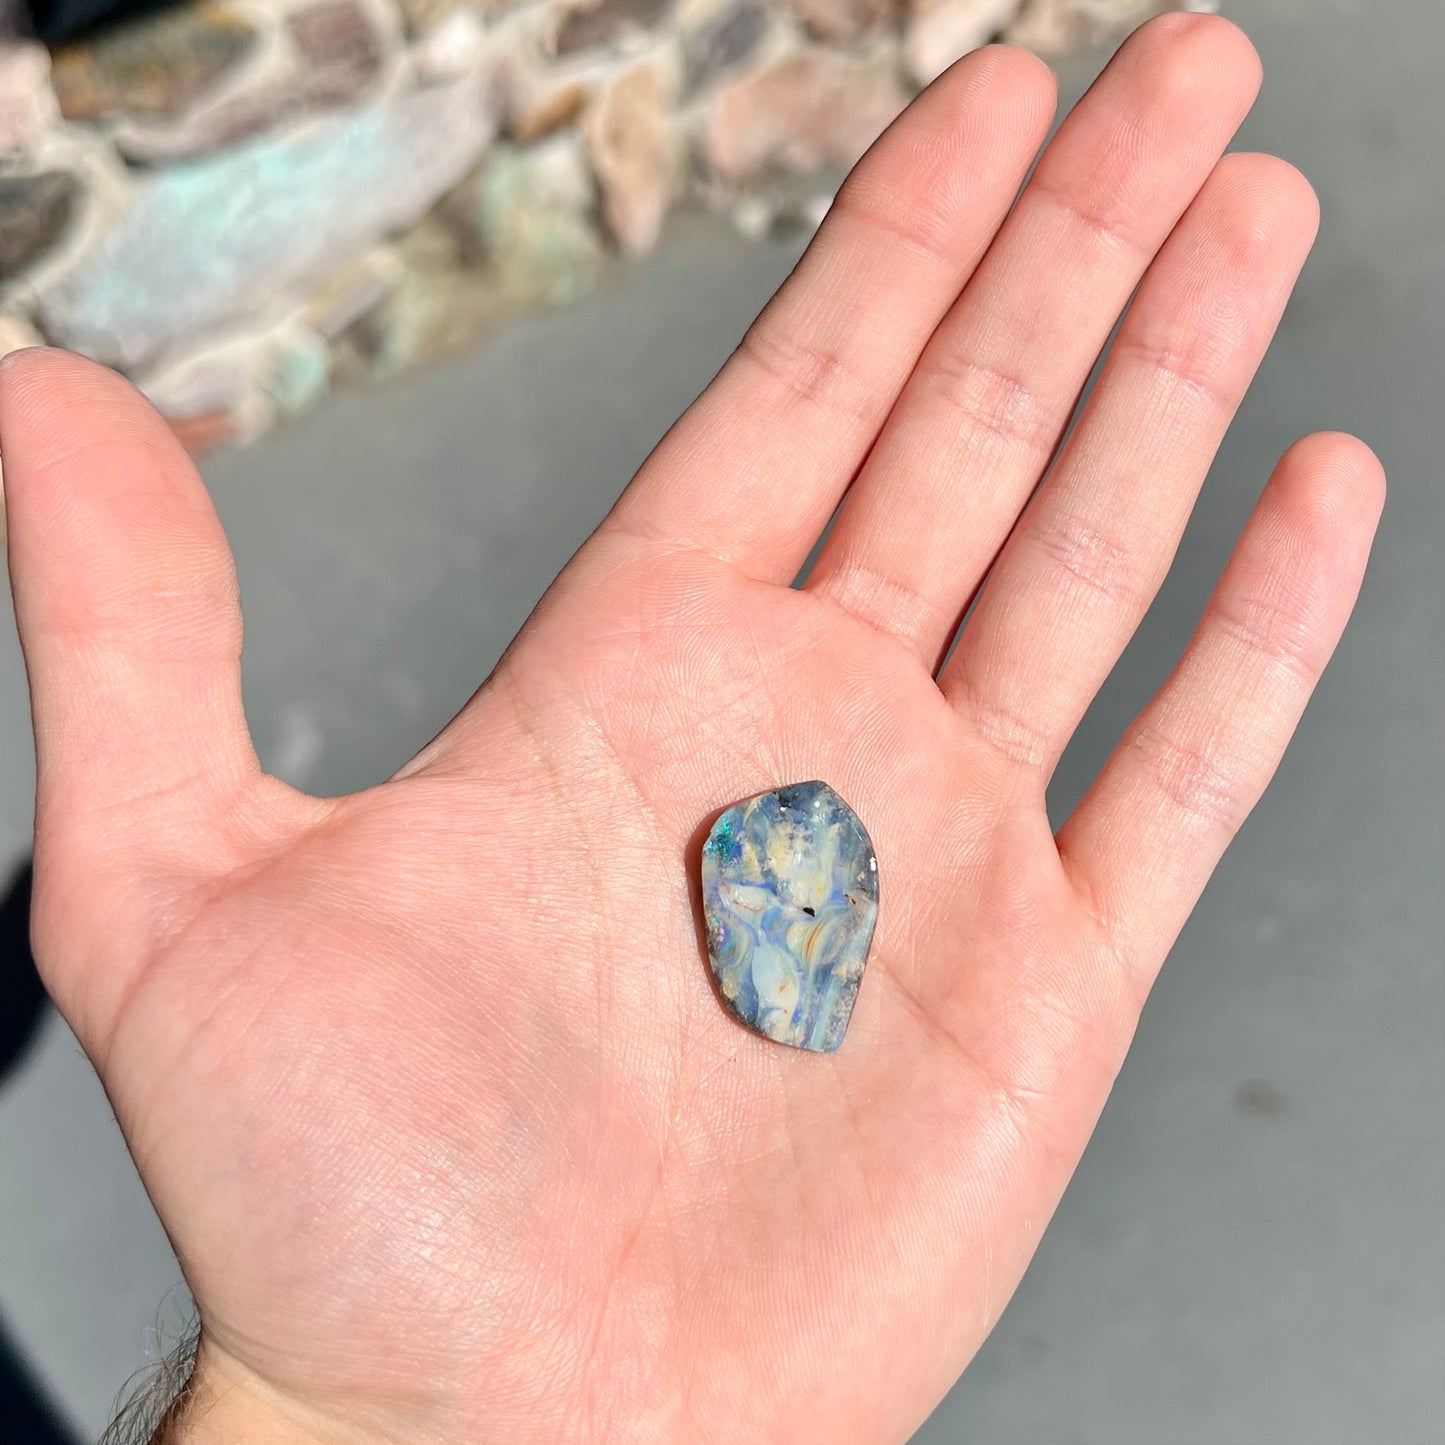 A loose, polished, freeform cut boulder opal stone from Queensland, Australia.